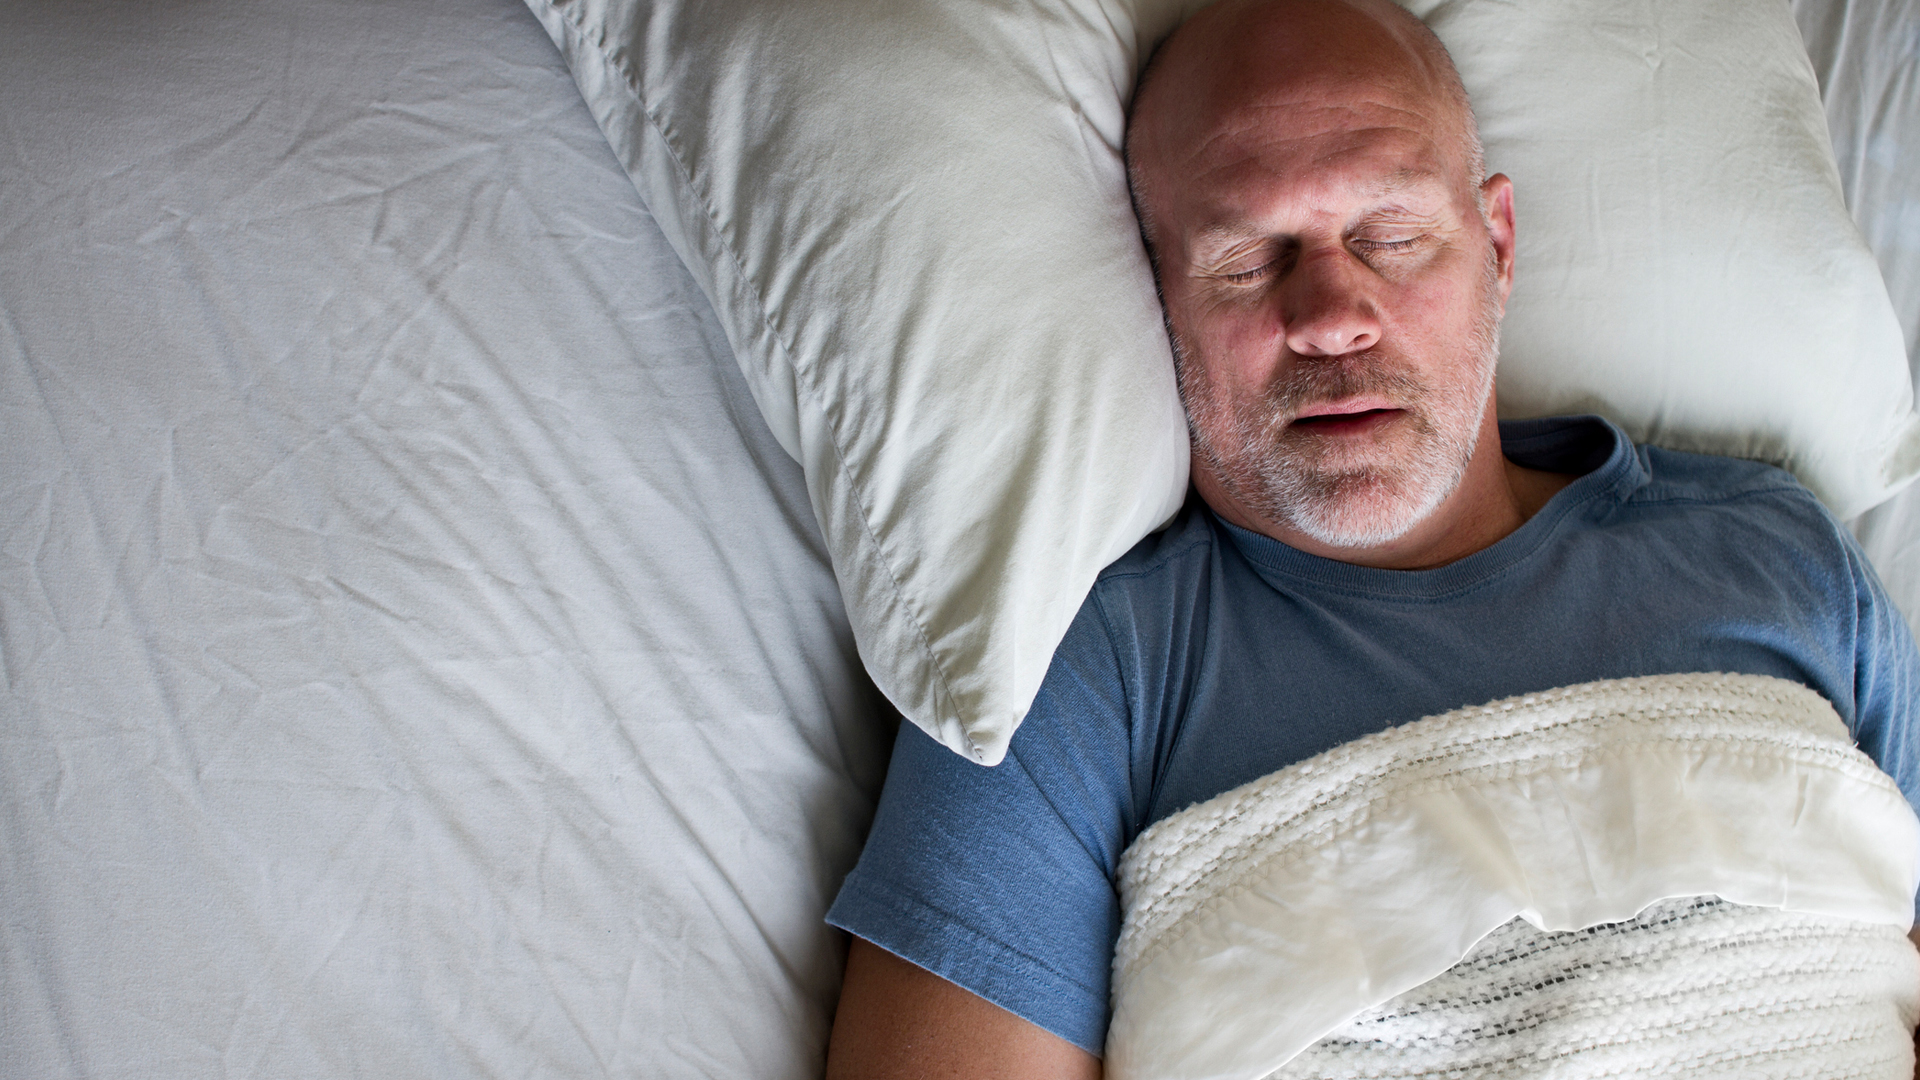 5 Major Sleep Apnea Symptoms in Senior Citizens